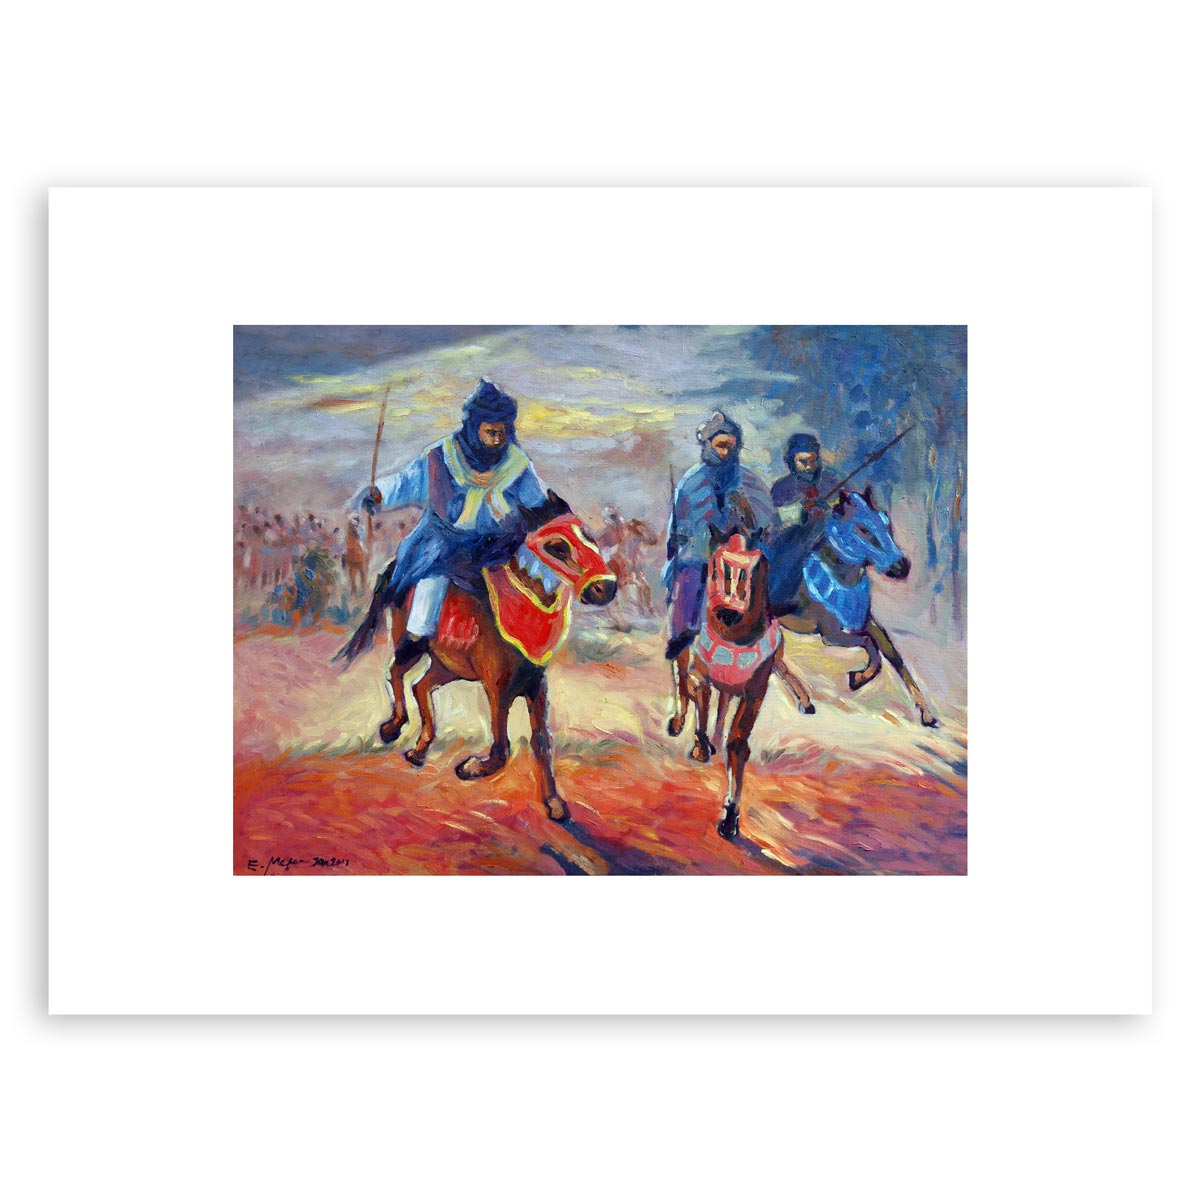 Charging Horses at Durbar – Nigerian festival (art print)